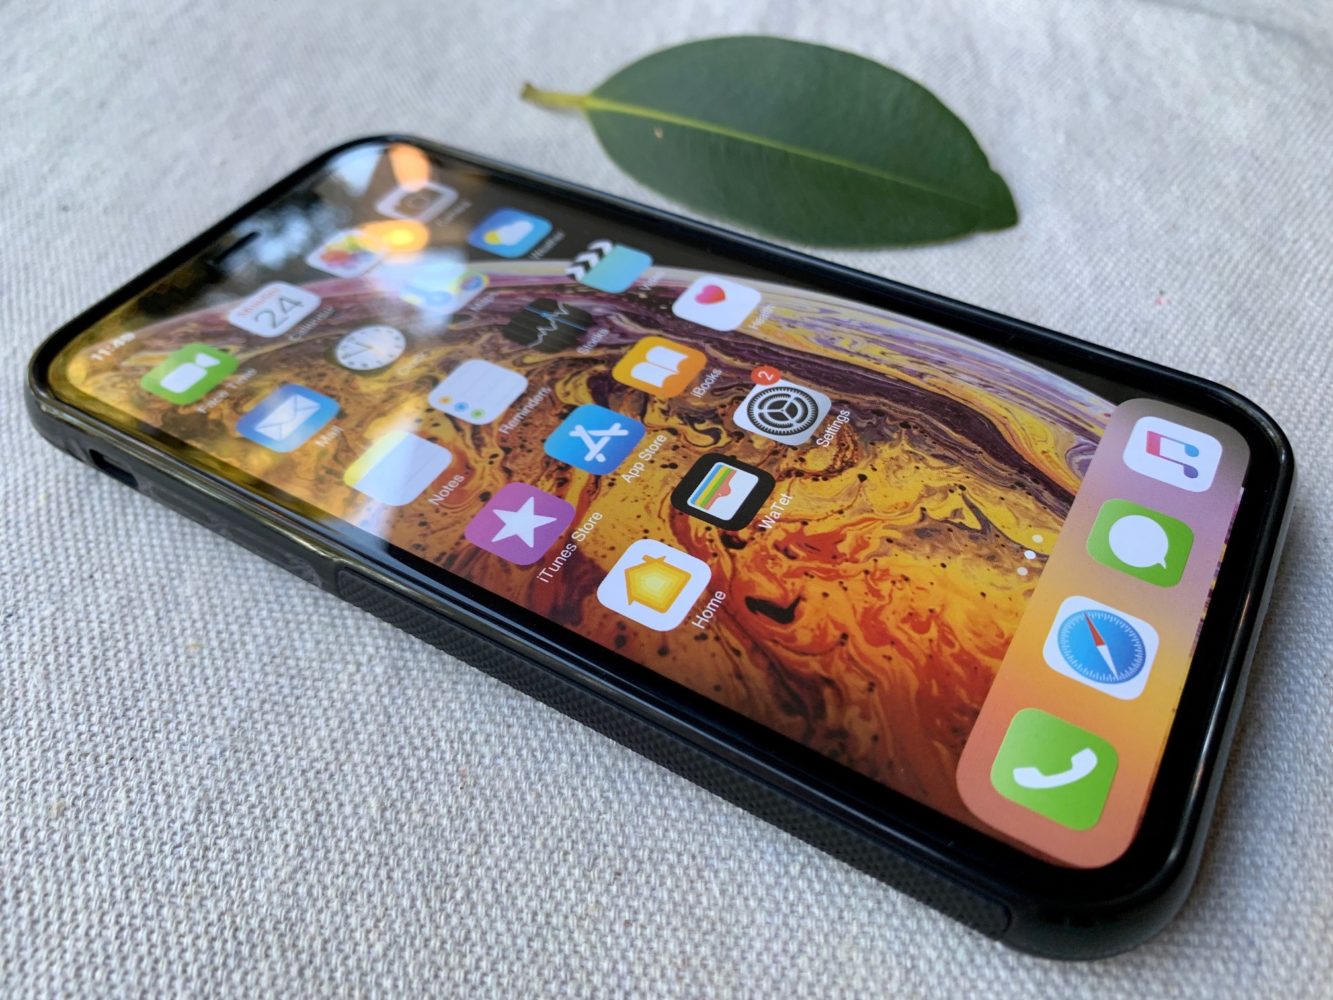 Wooden iPhone XR Case